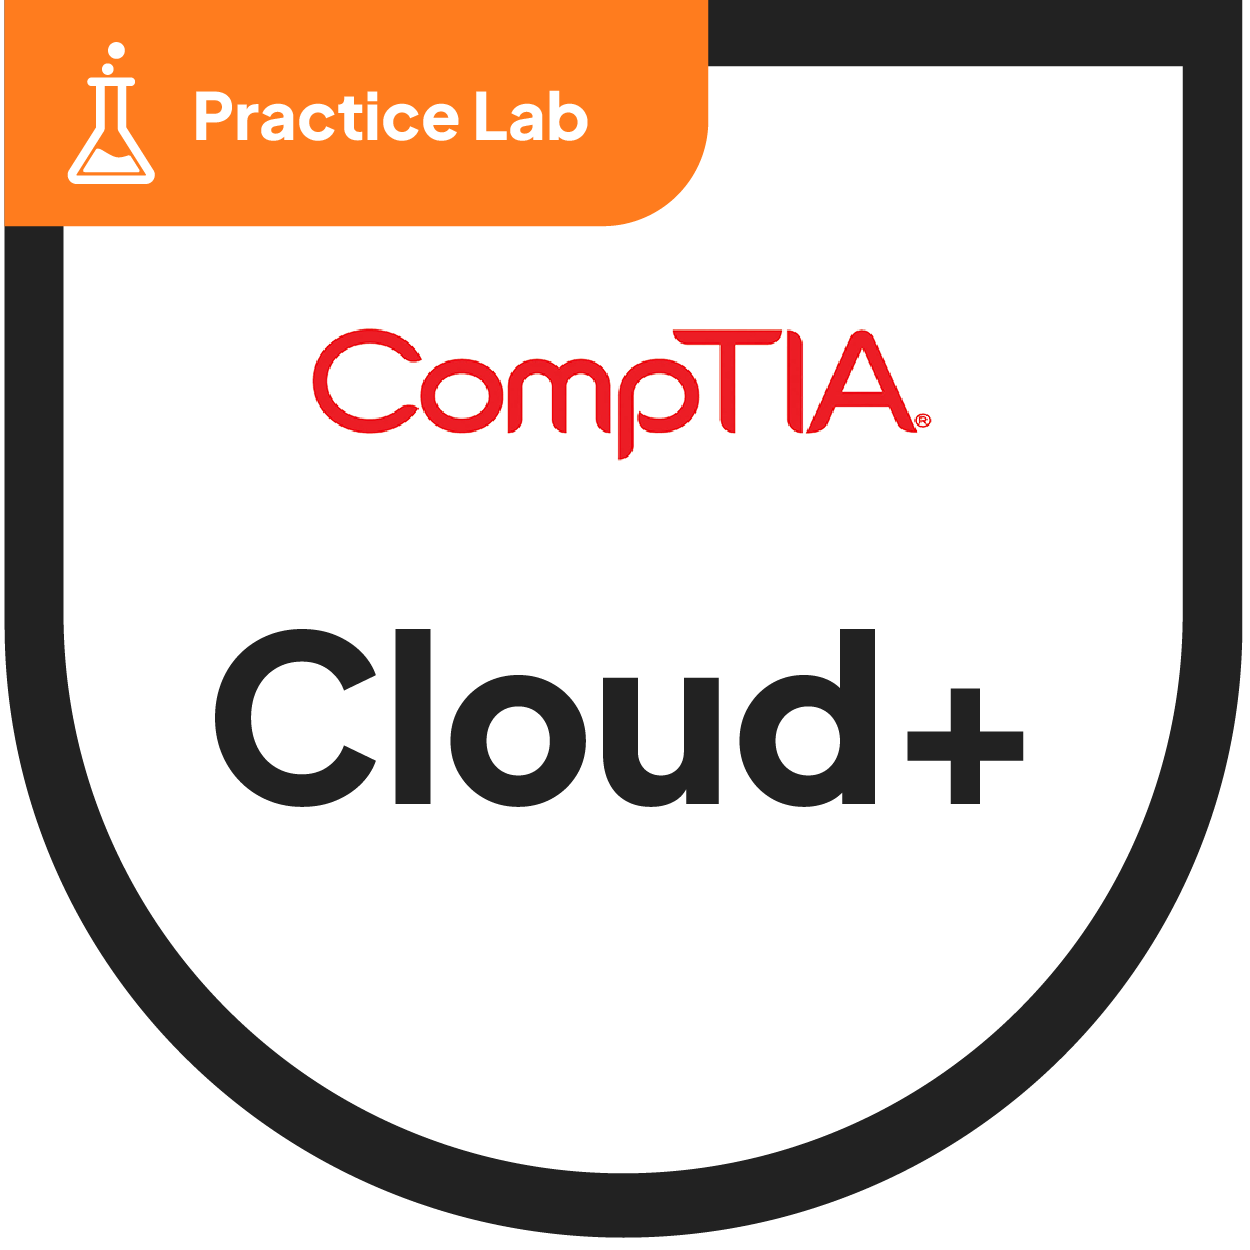 CompTIA Cloud+ (CV0-003) | Practice Labs